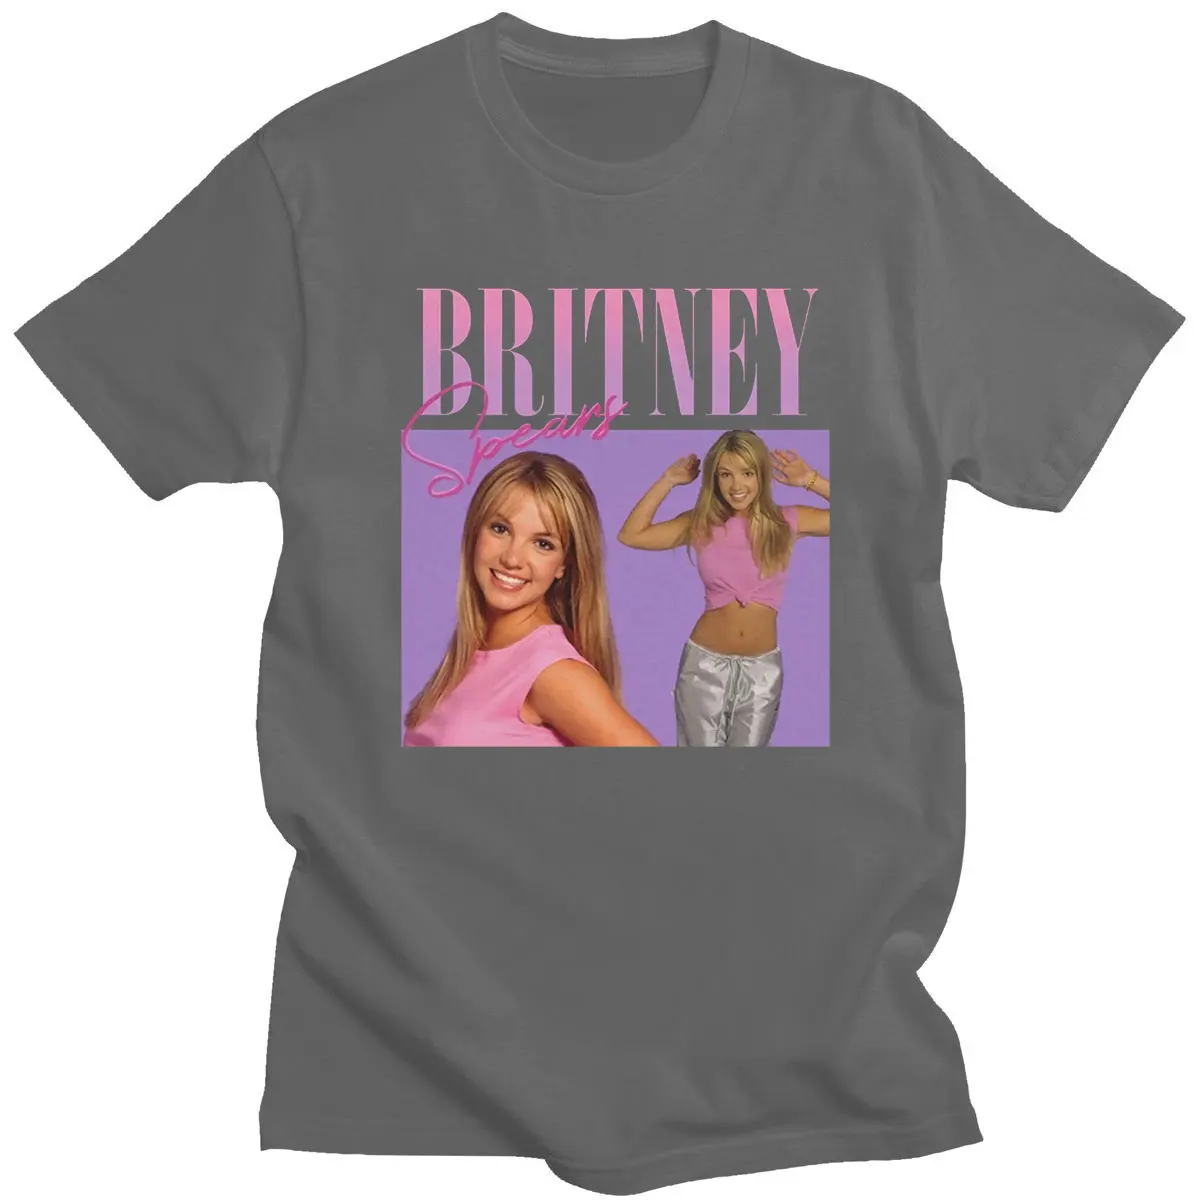 Новая стильная Красивая фотопечать Britney Spears популярная забавная футболка